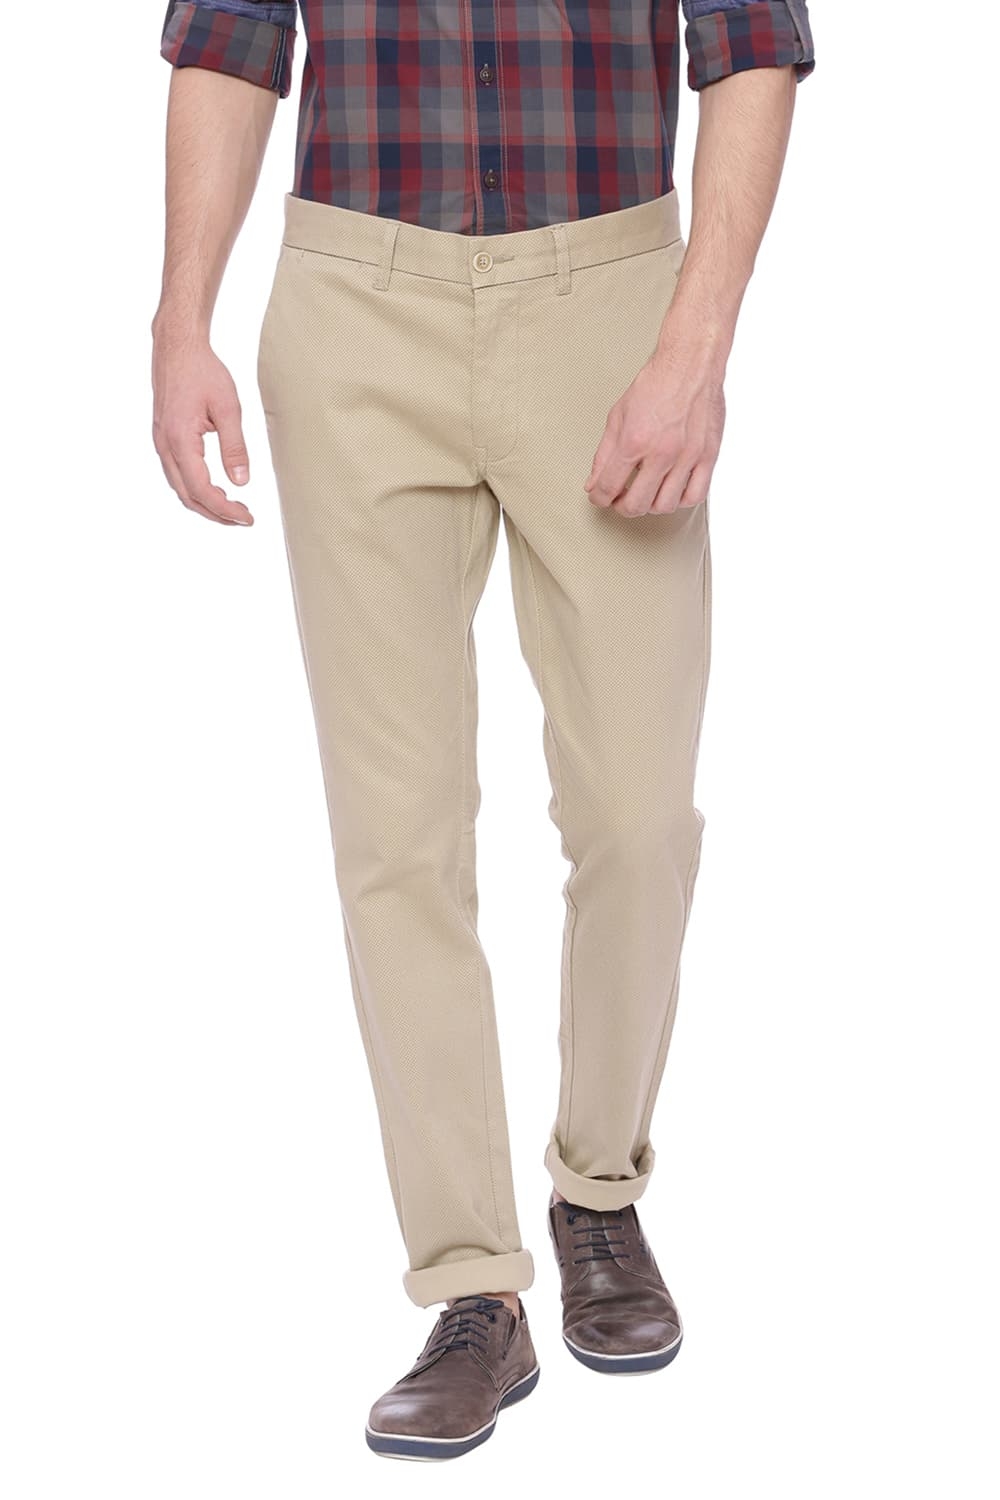 Basics | Basics Skinny Fit Cement Khaki Printed Stretch Trouser